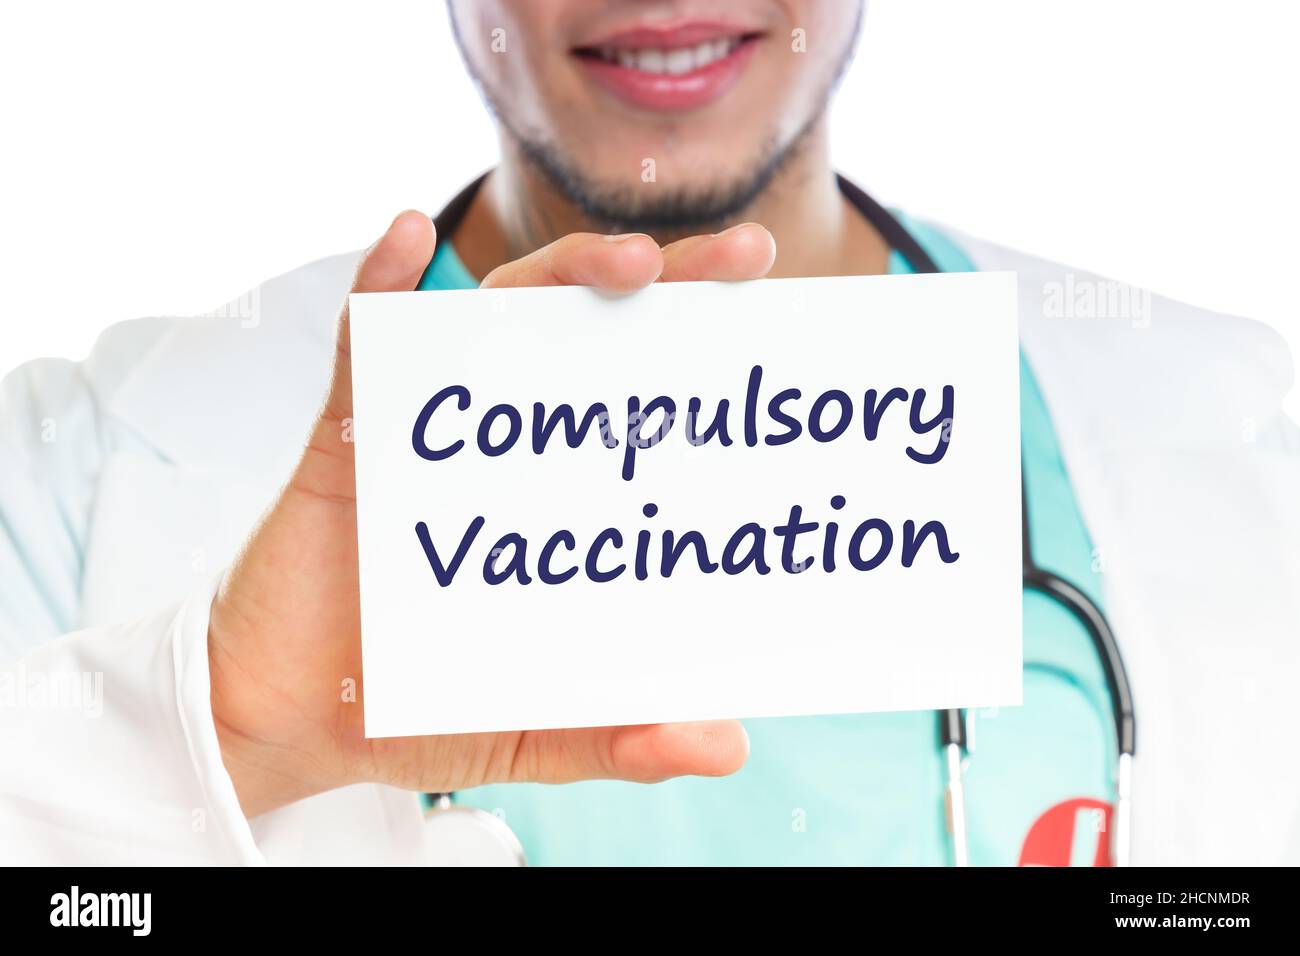 Compulsory vaccination against coronavirus vaccine hesitancy corona virus COVID-19 Covid doctor illness Stock Photo